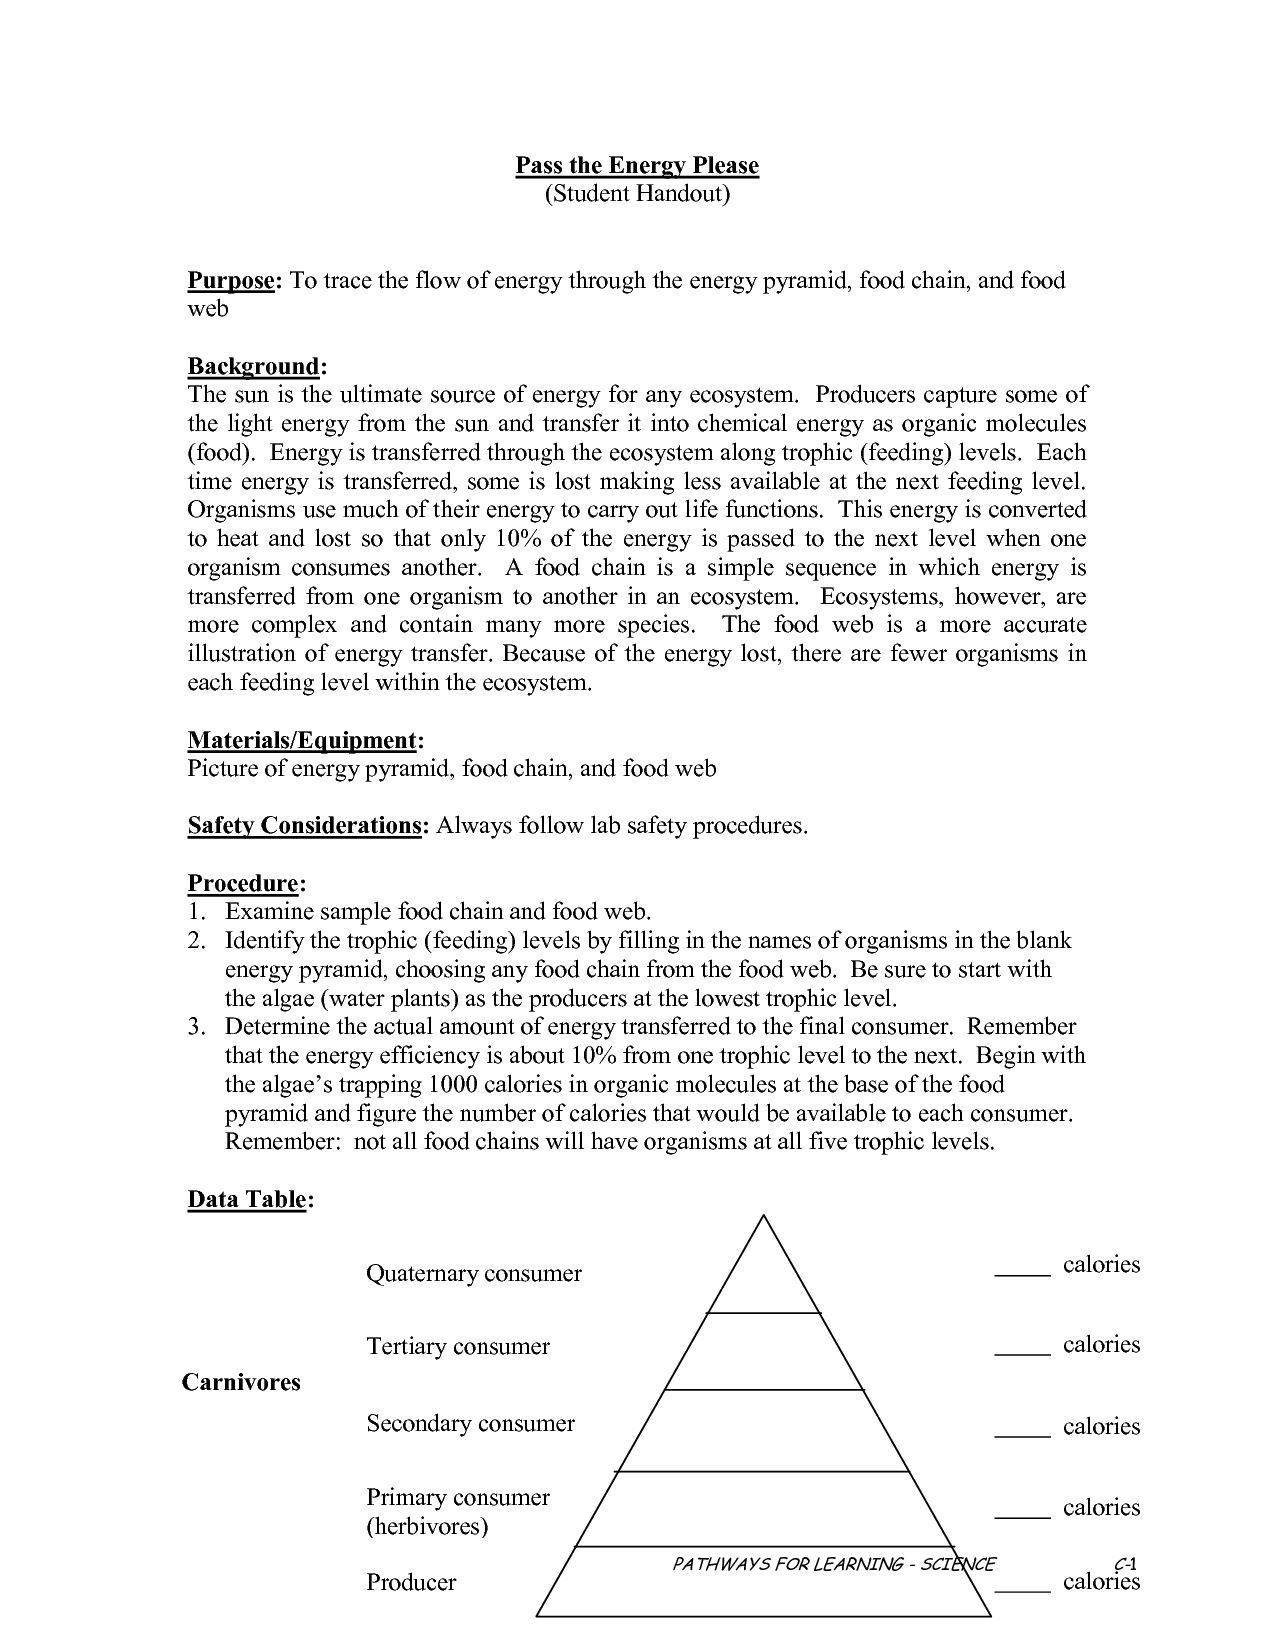 Blank Energy Pyramid Worksheet Image